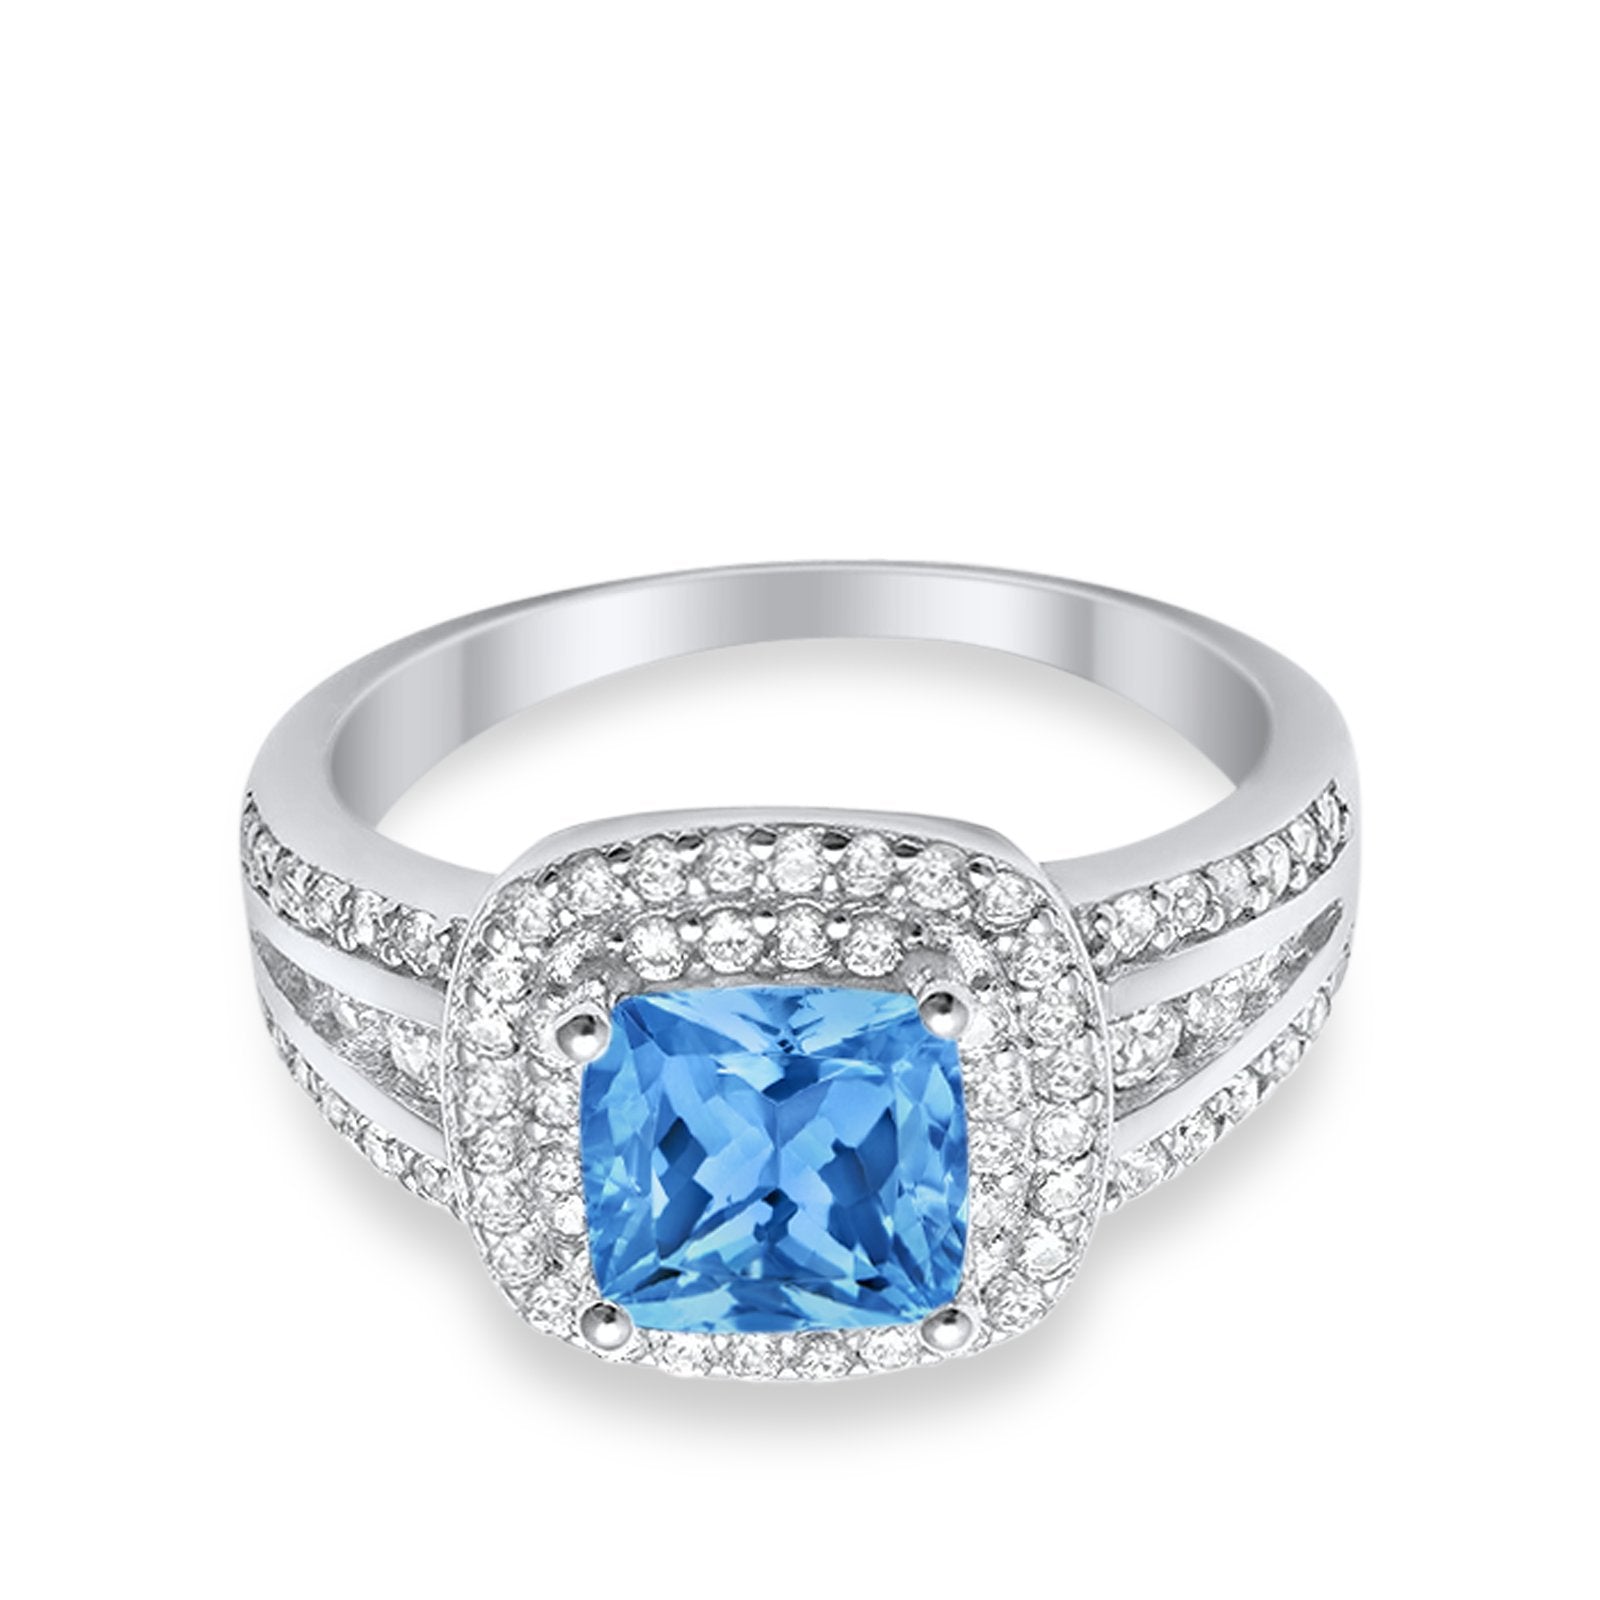 Halo Art Deco Wedding Ring Princess Cut Round Simulated Blue Topaz CZ 925 Sterling Silver